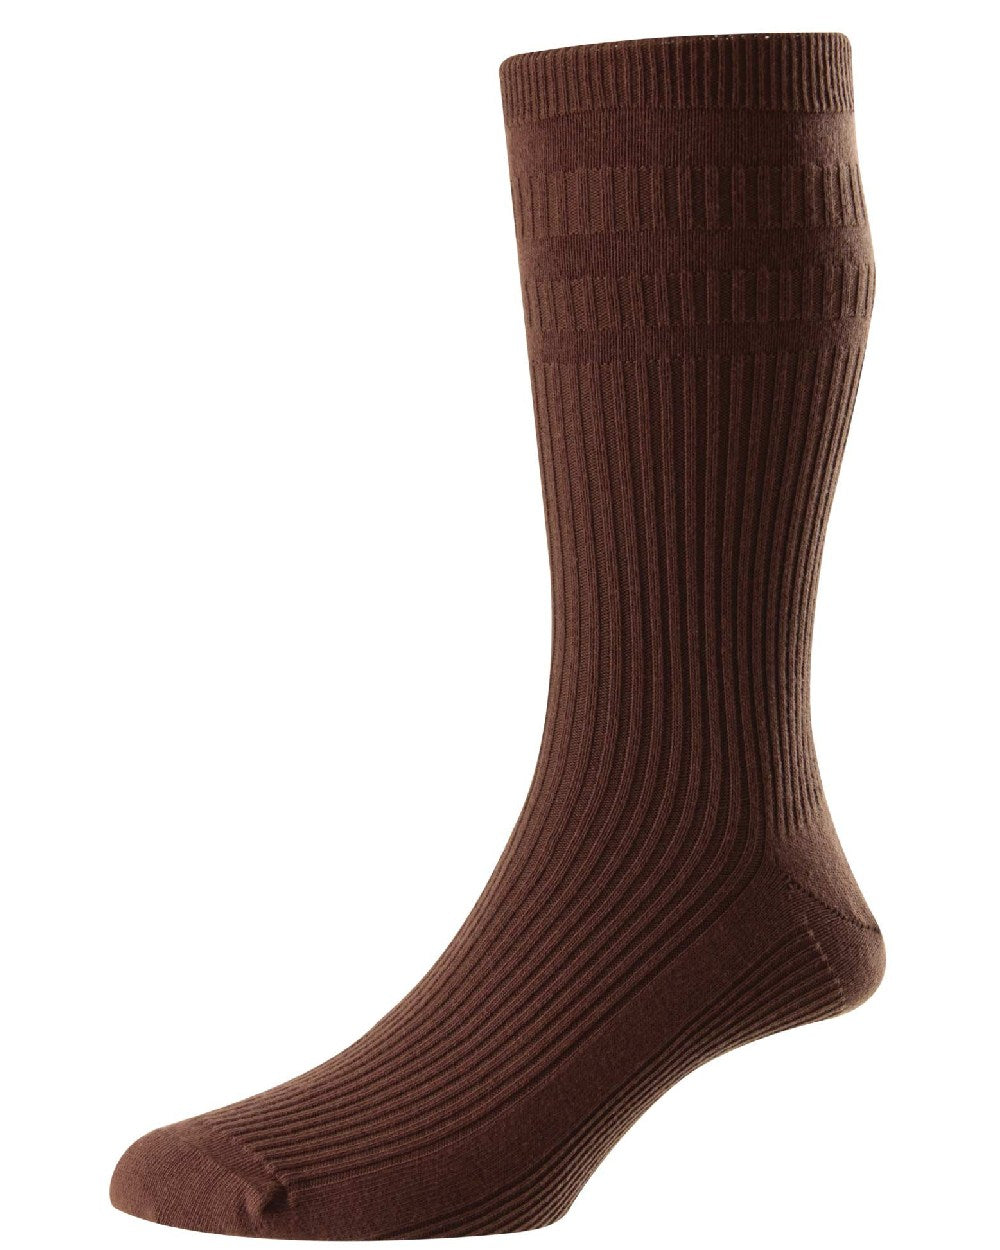 HJ Hall Original Cotton Soft Top Socks in Brown 